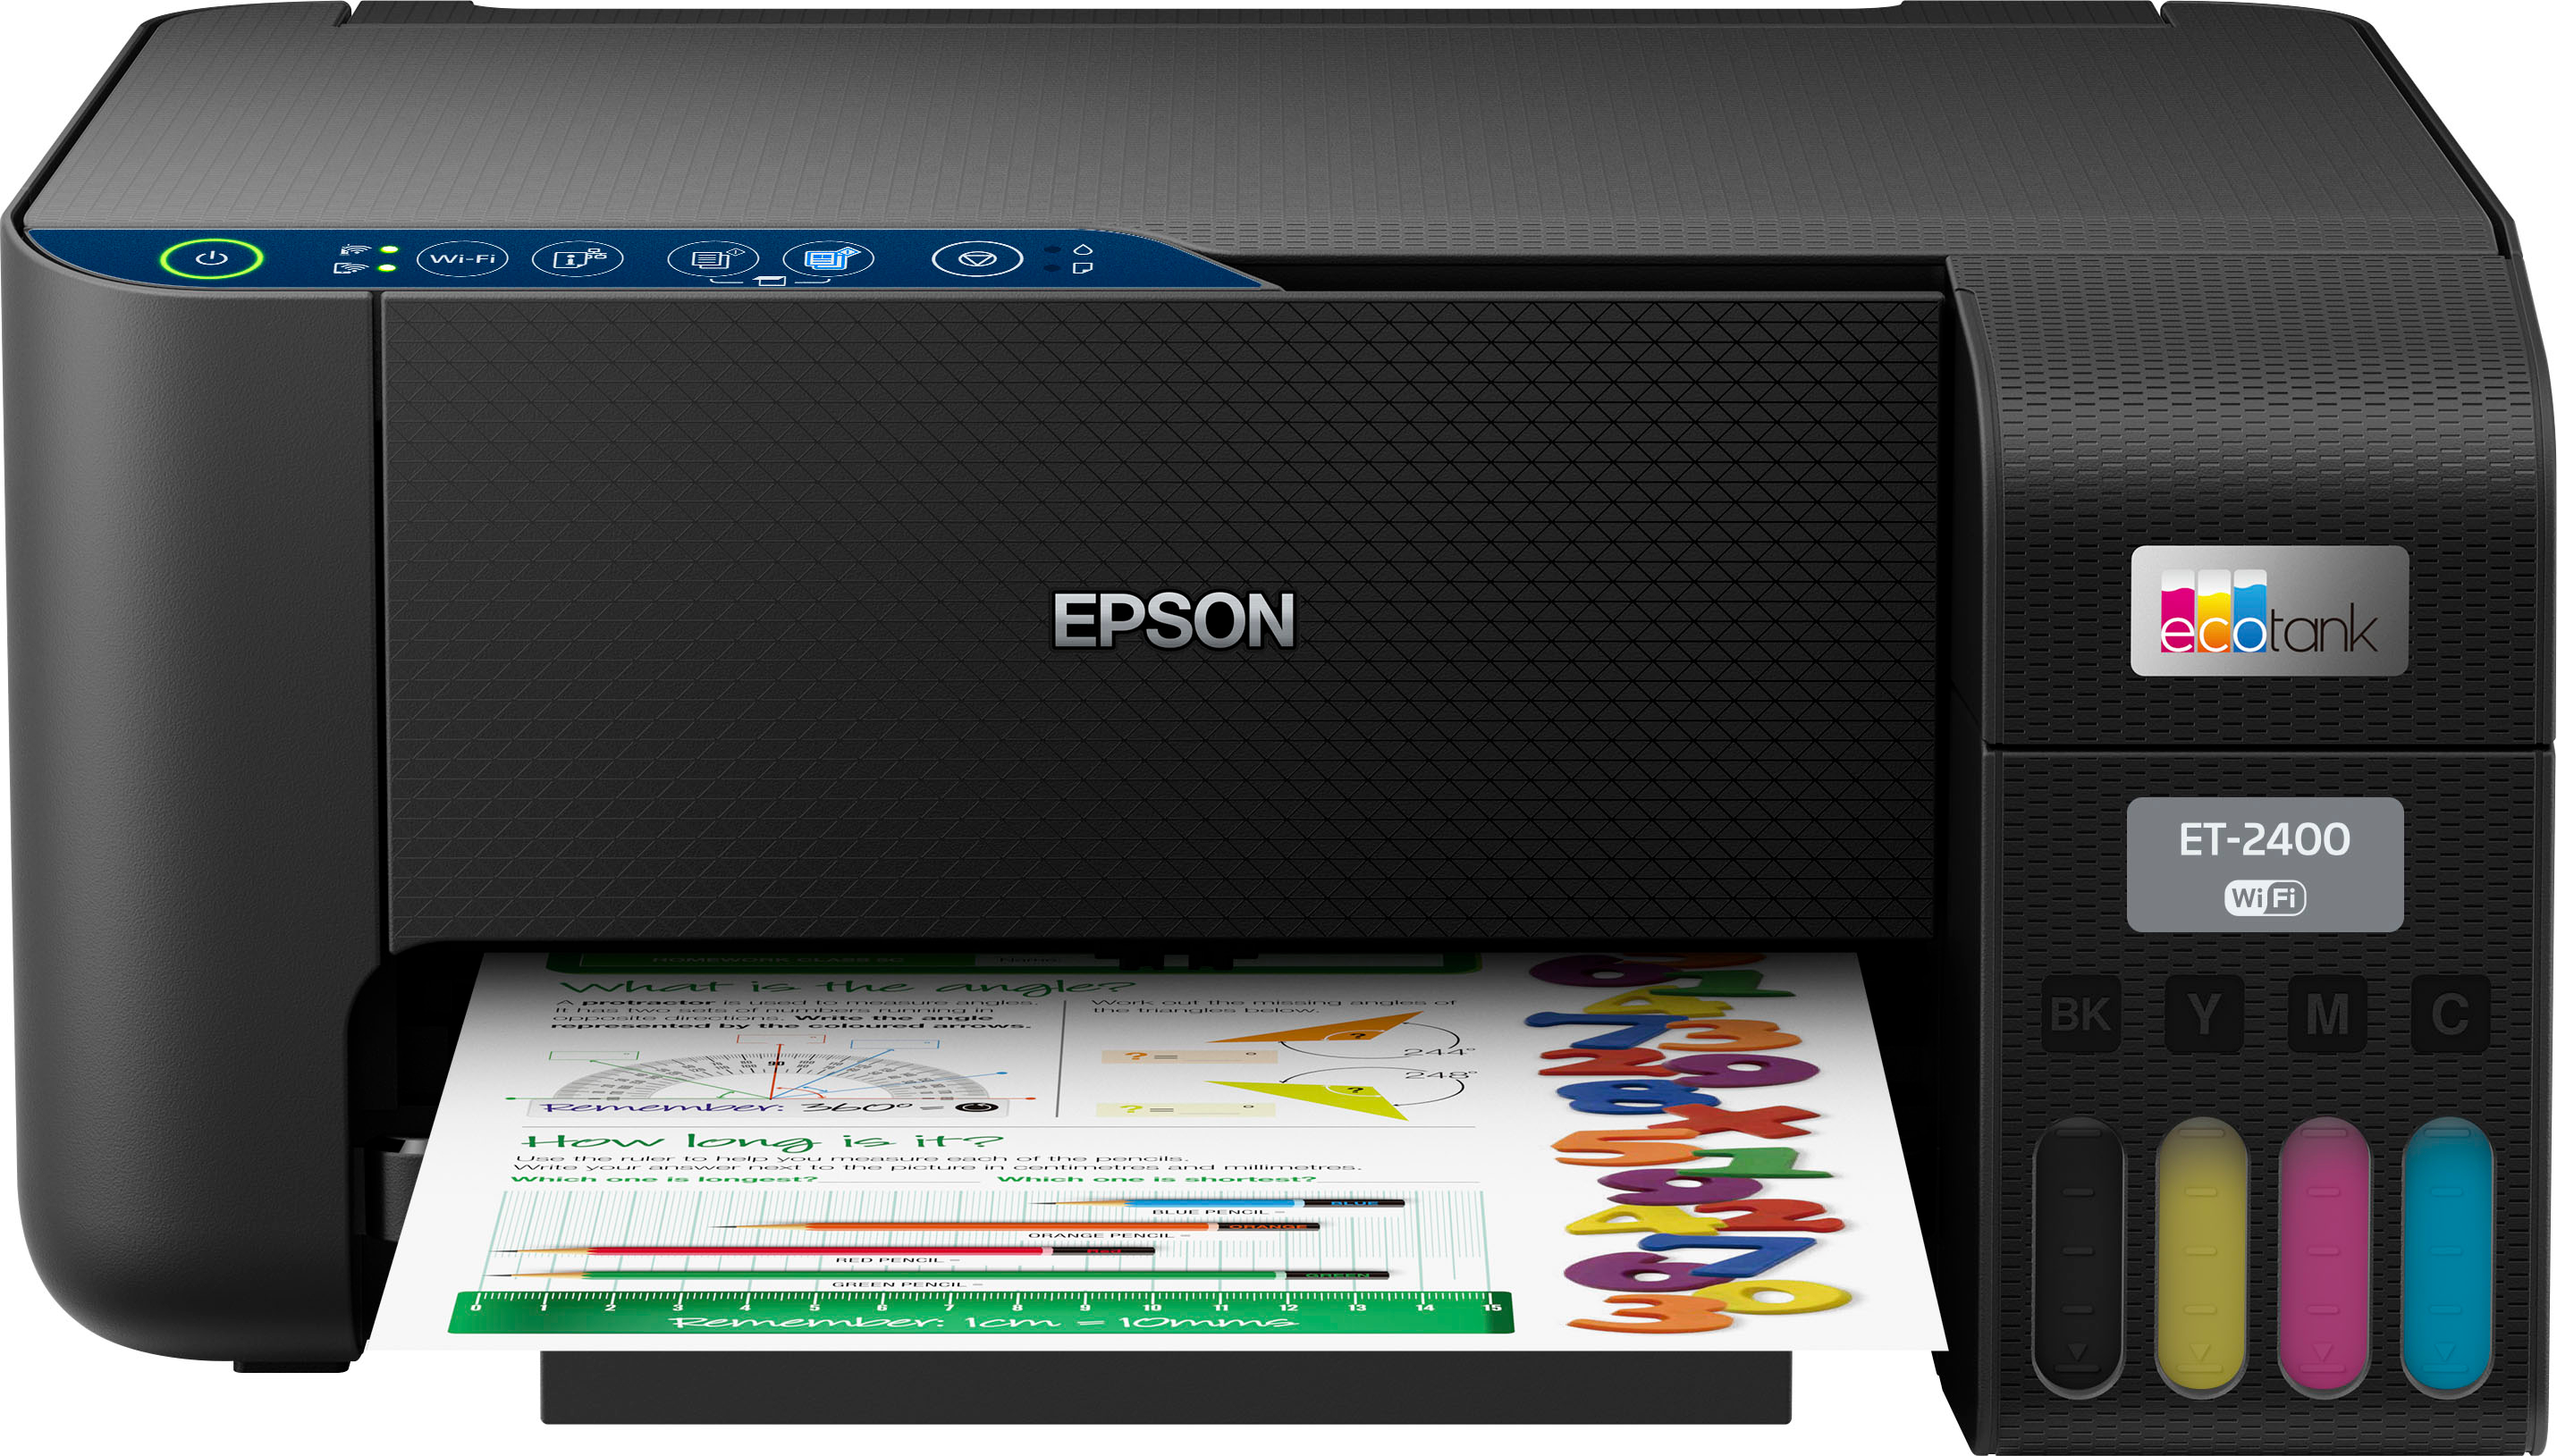 Epson EcoTank ET-2850 All-in-One - Micro Center